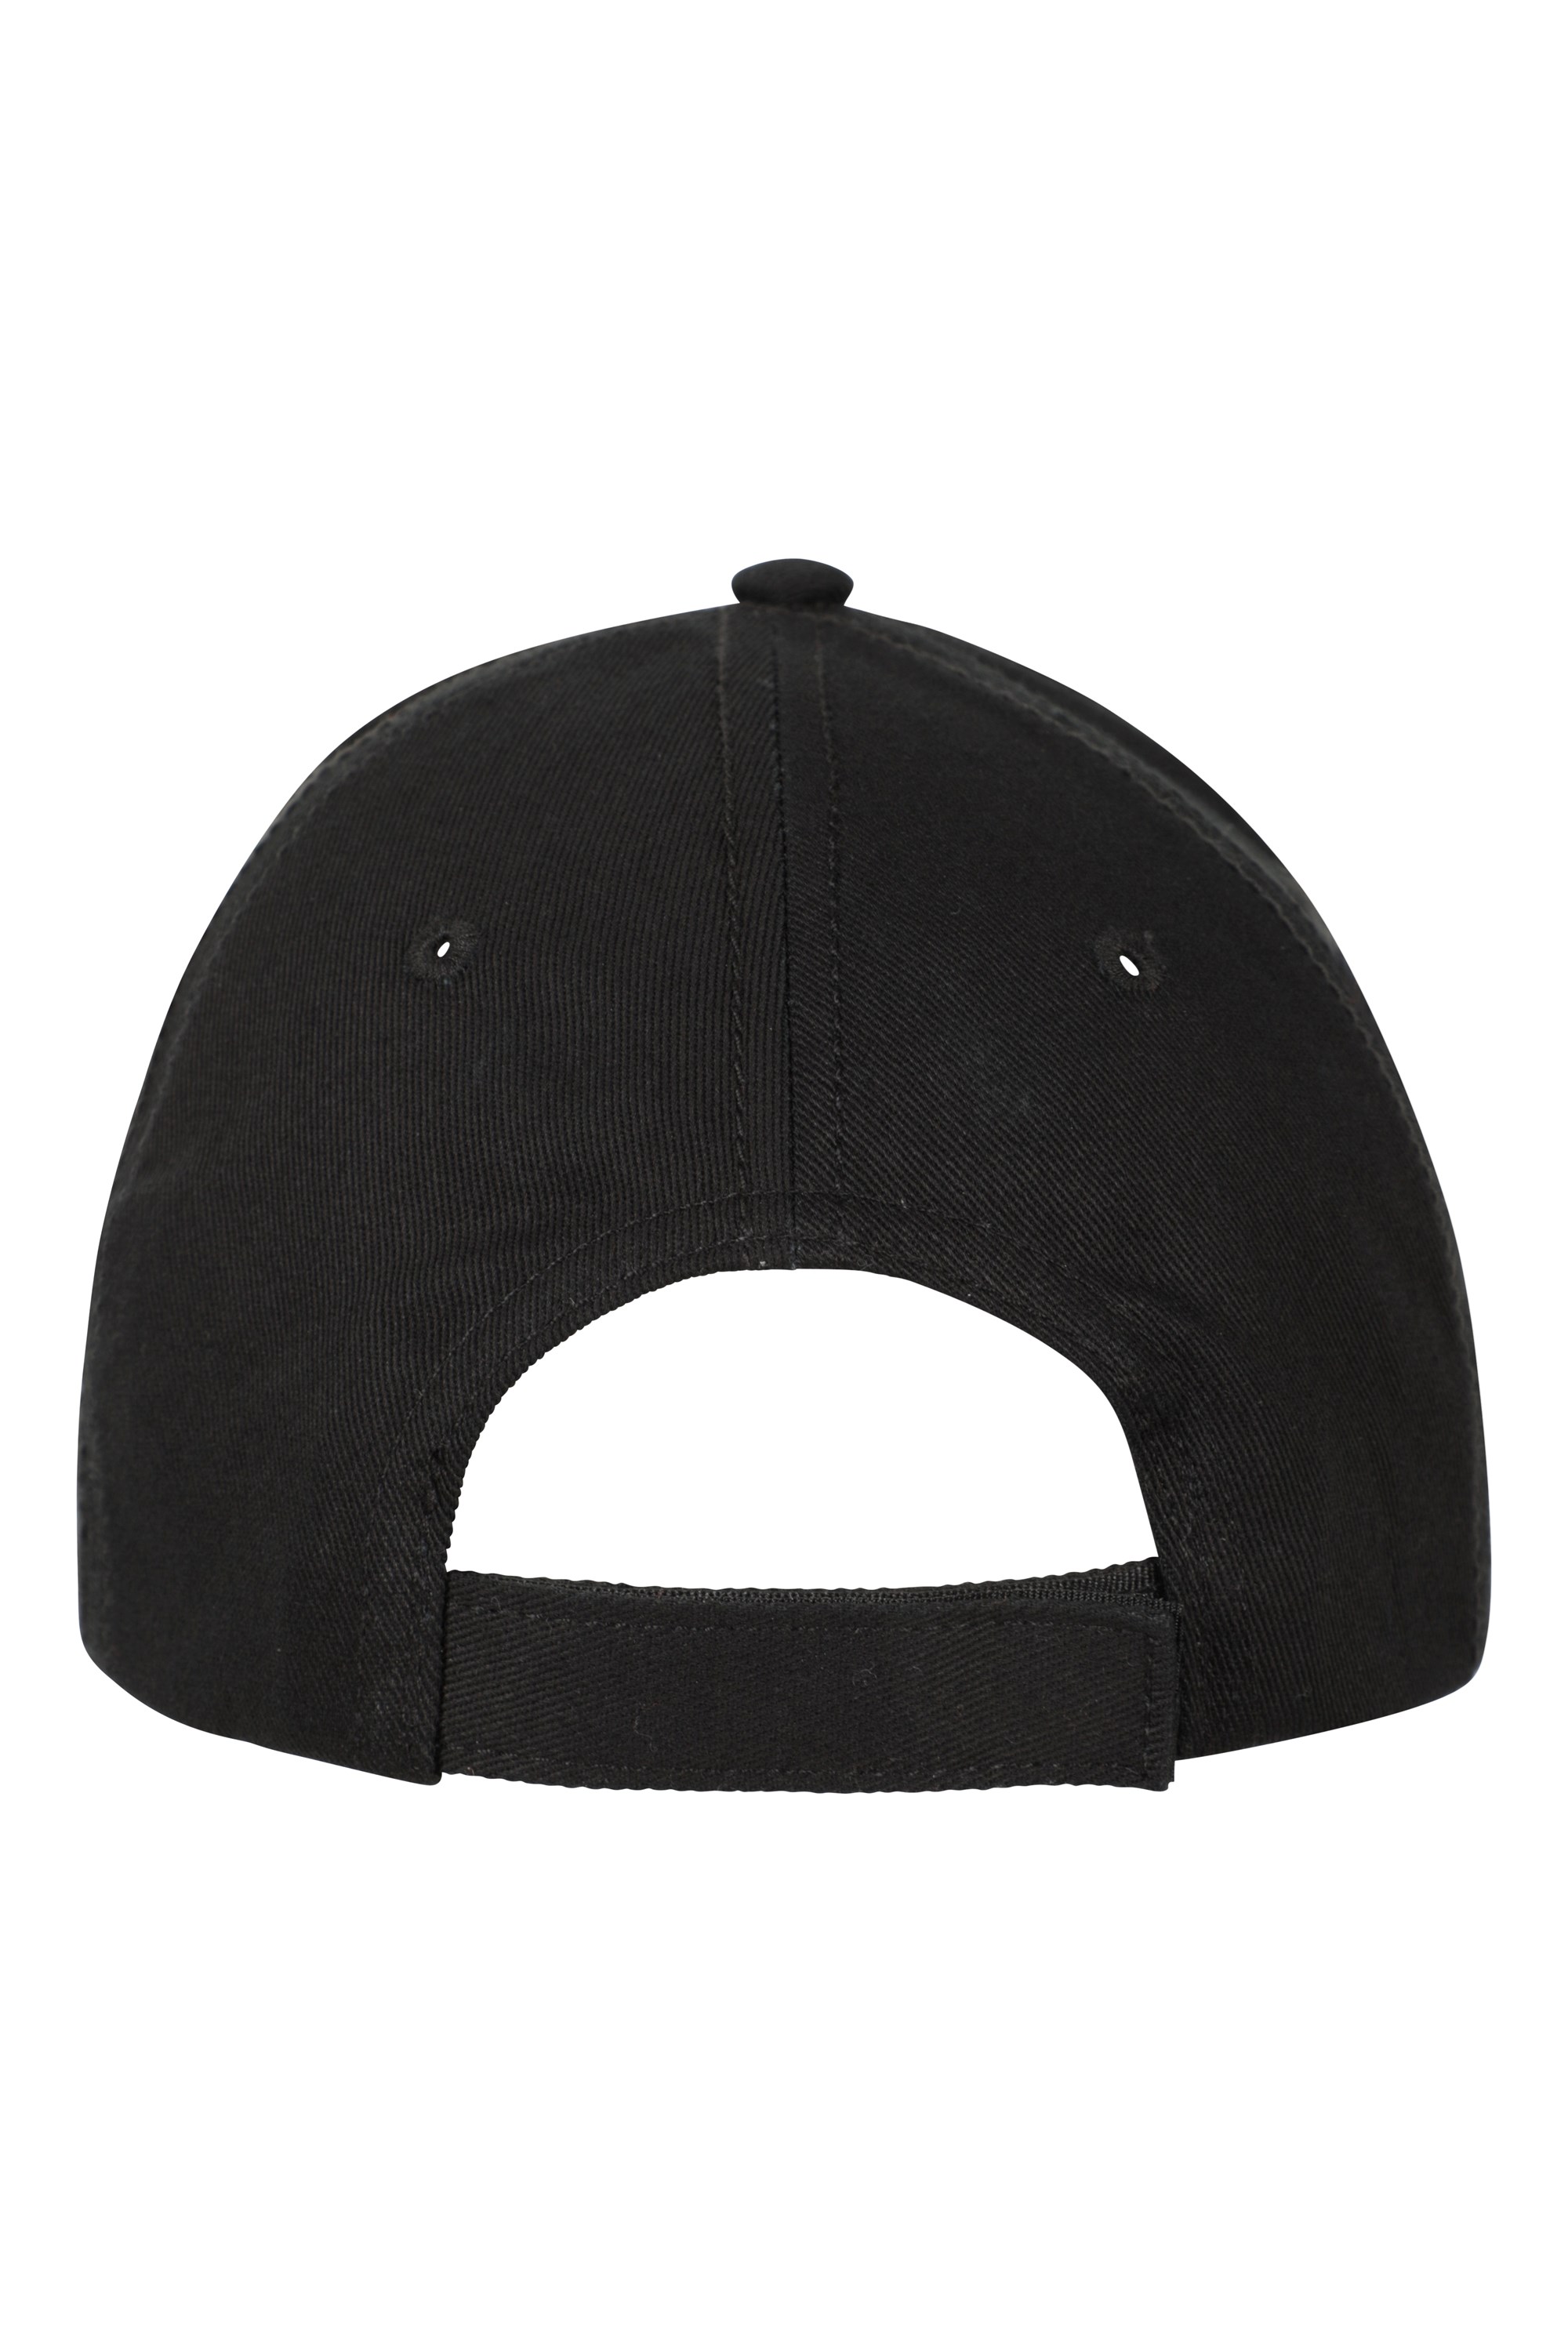 Mountain Warehouse Baseball Cap - Black | Size One